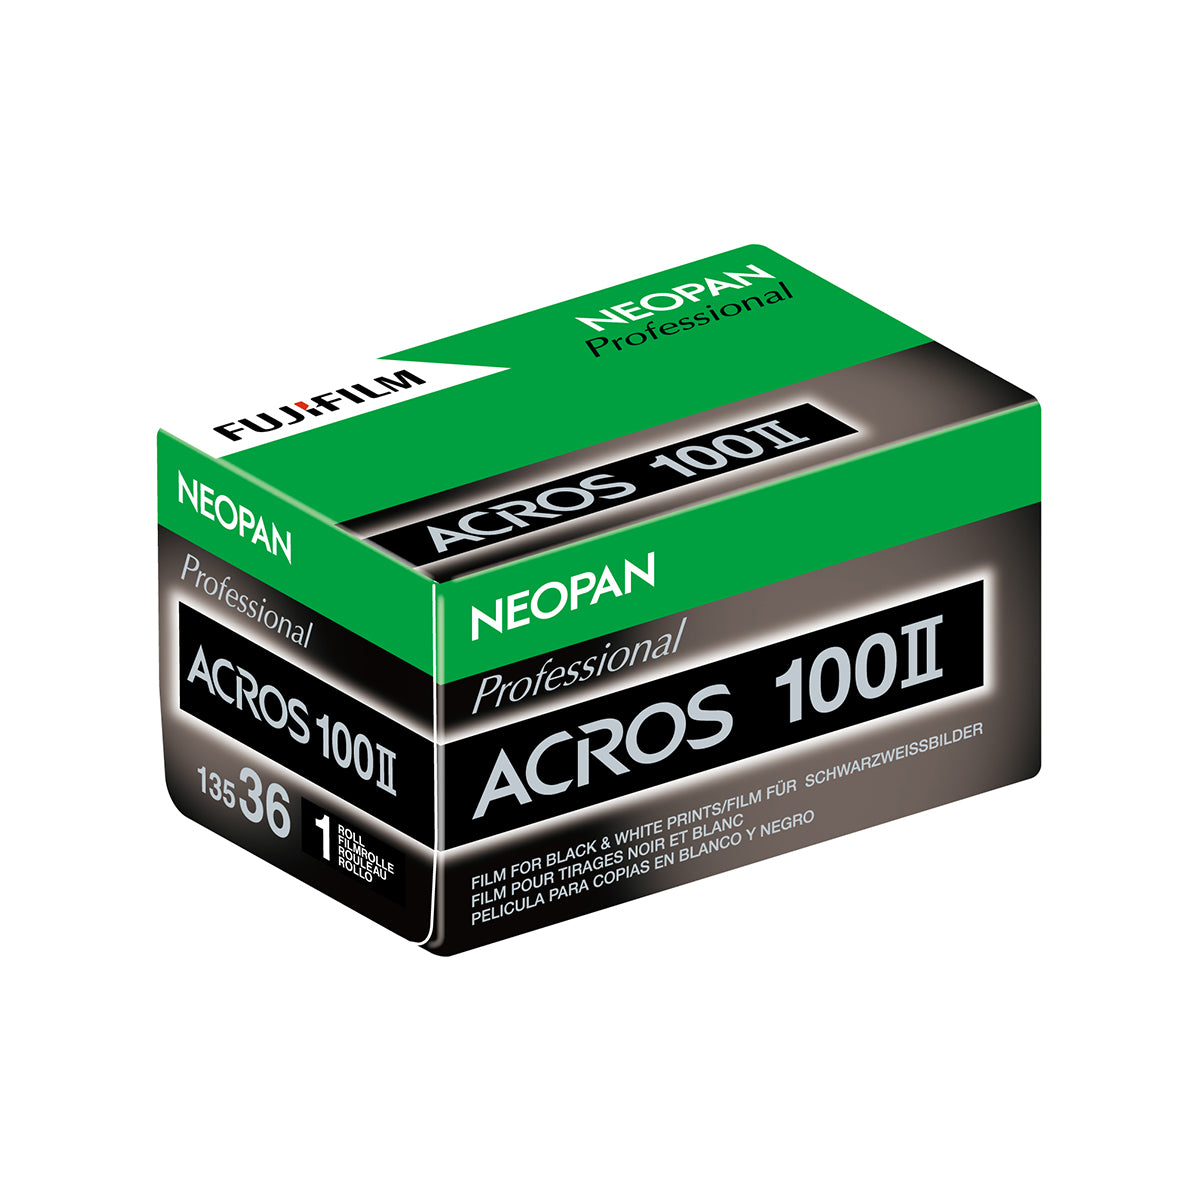 Fujifilm Neopan Acros 100 II B&W Film 135-36 (One Roll)